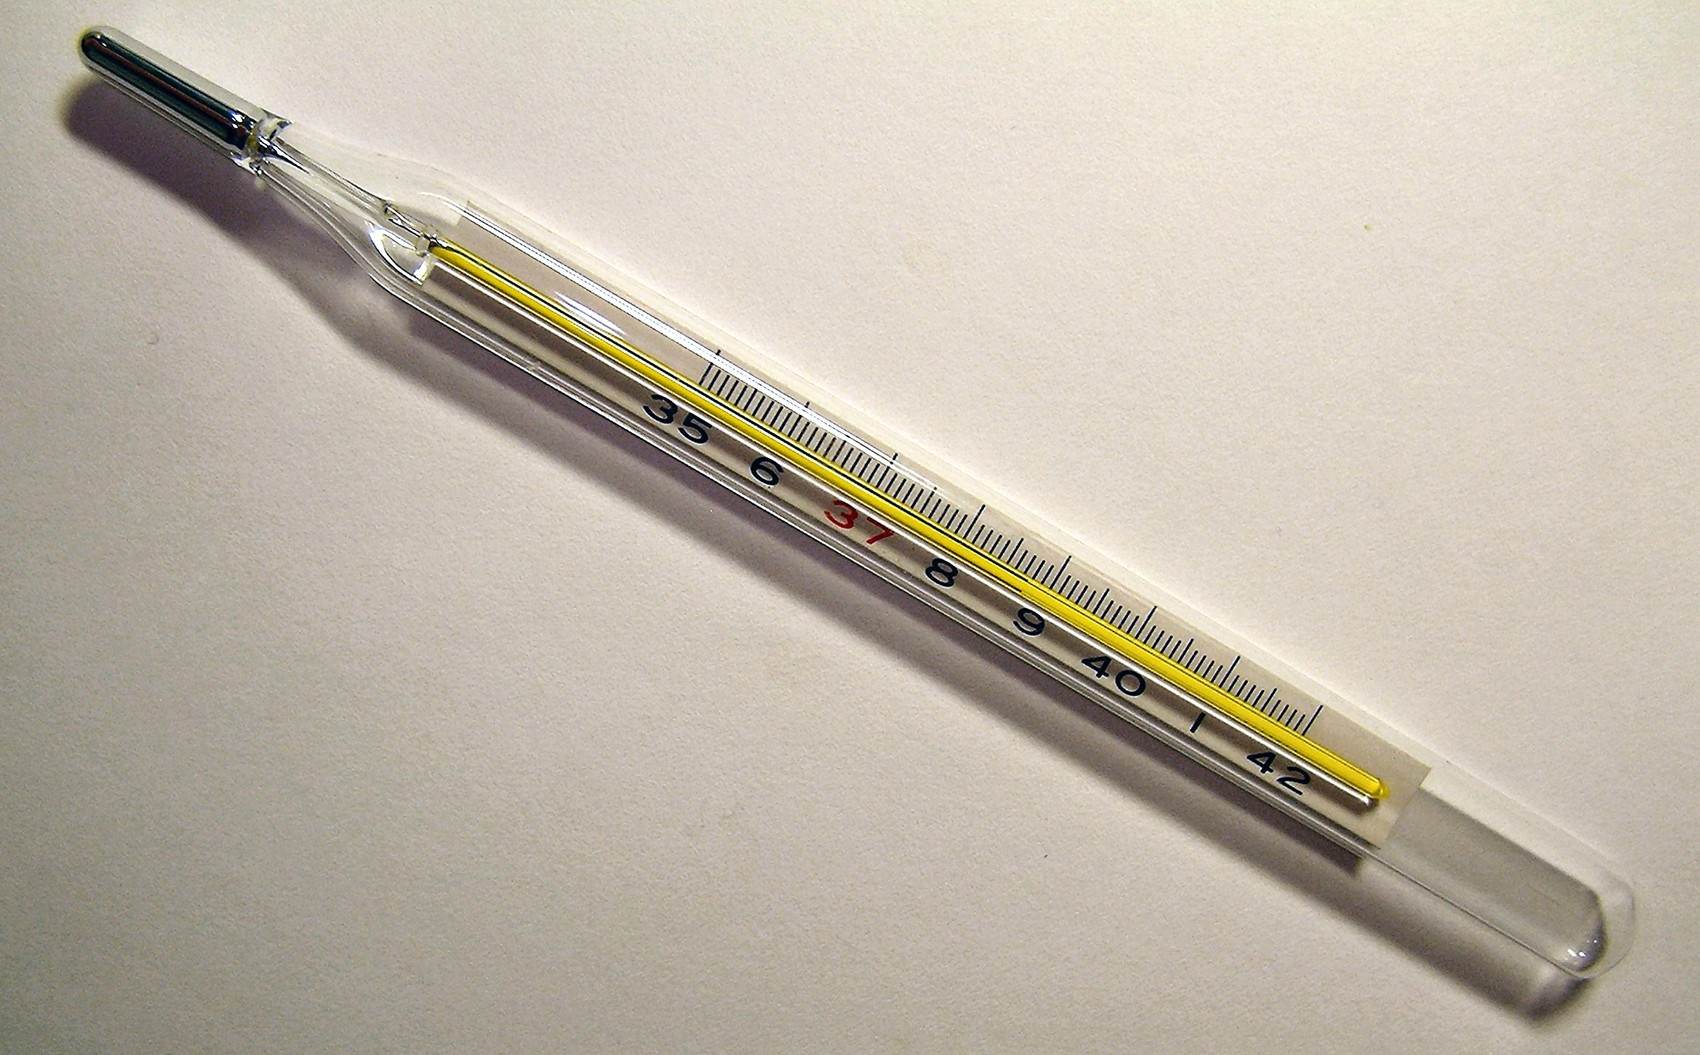  Termômetro de mercúrio pode ser proibido no Brasil (Foto: Menchi/Wikimedia Commons)